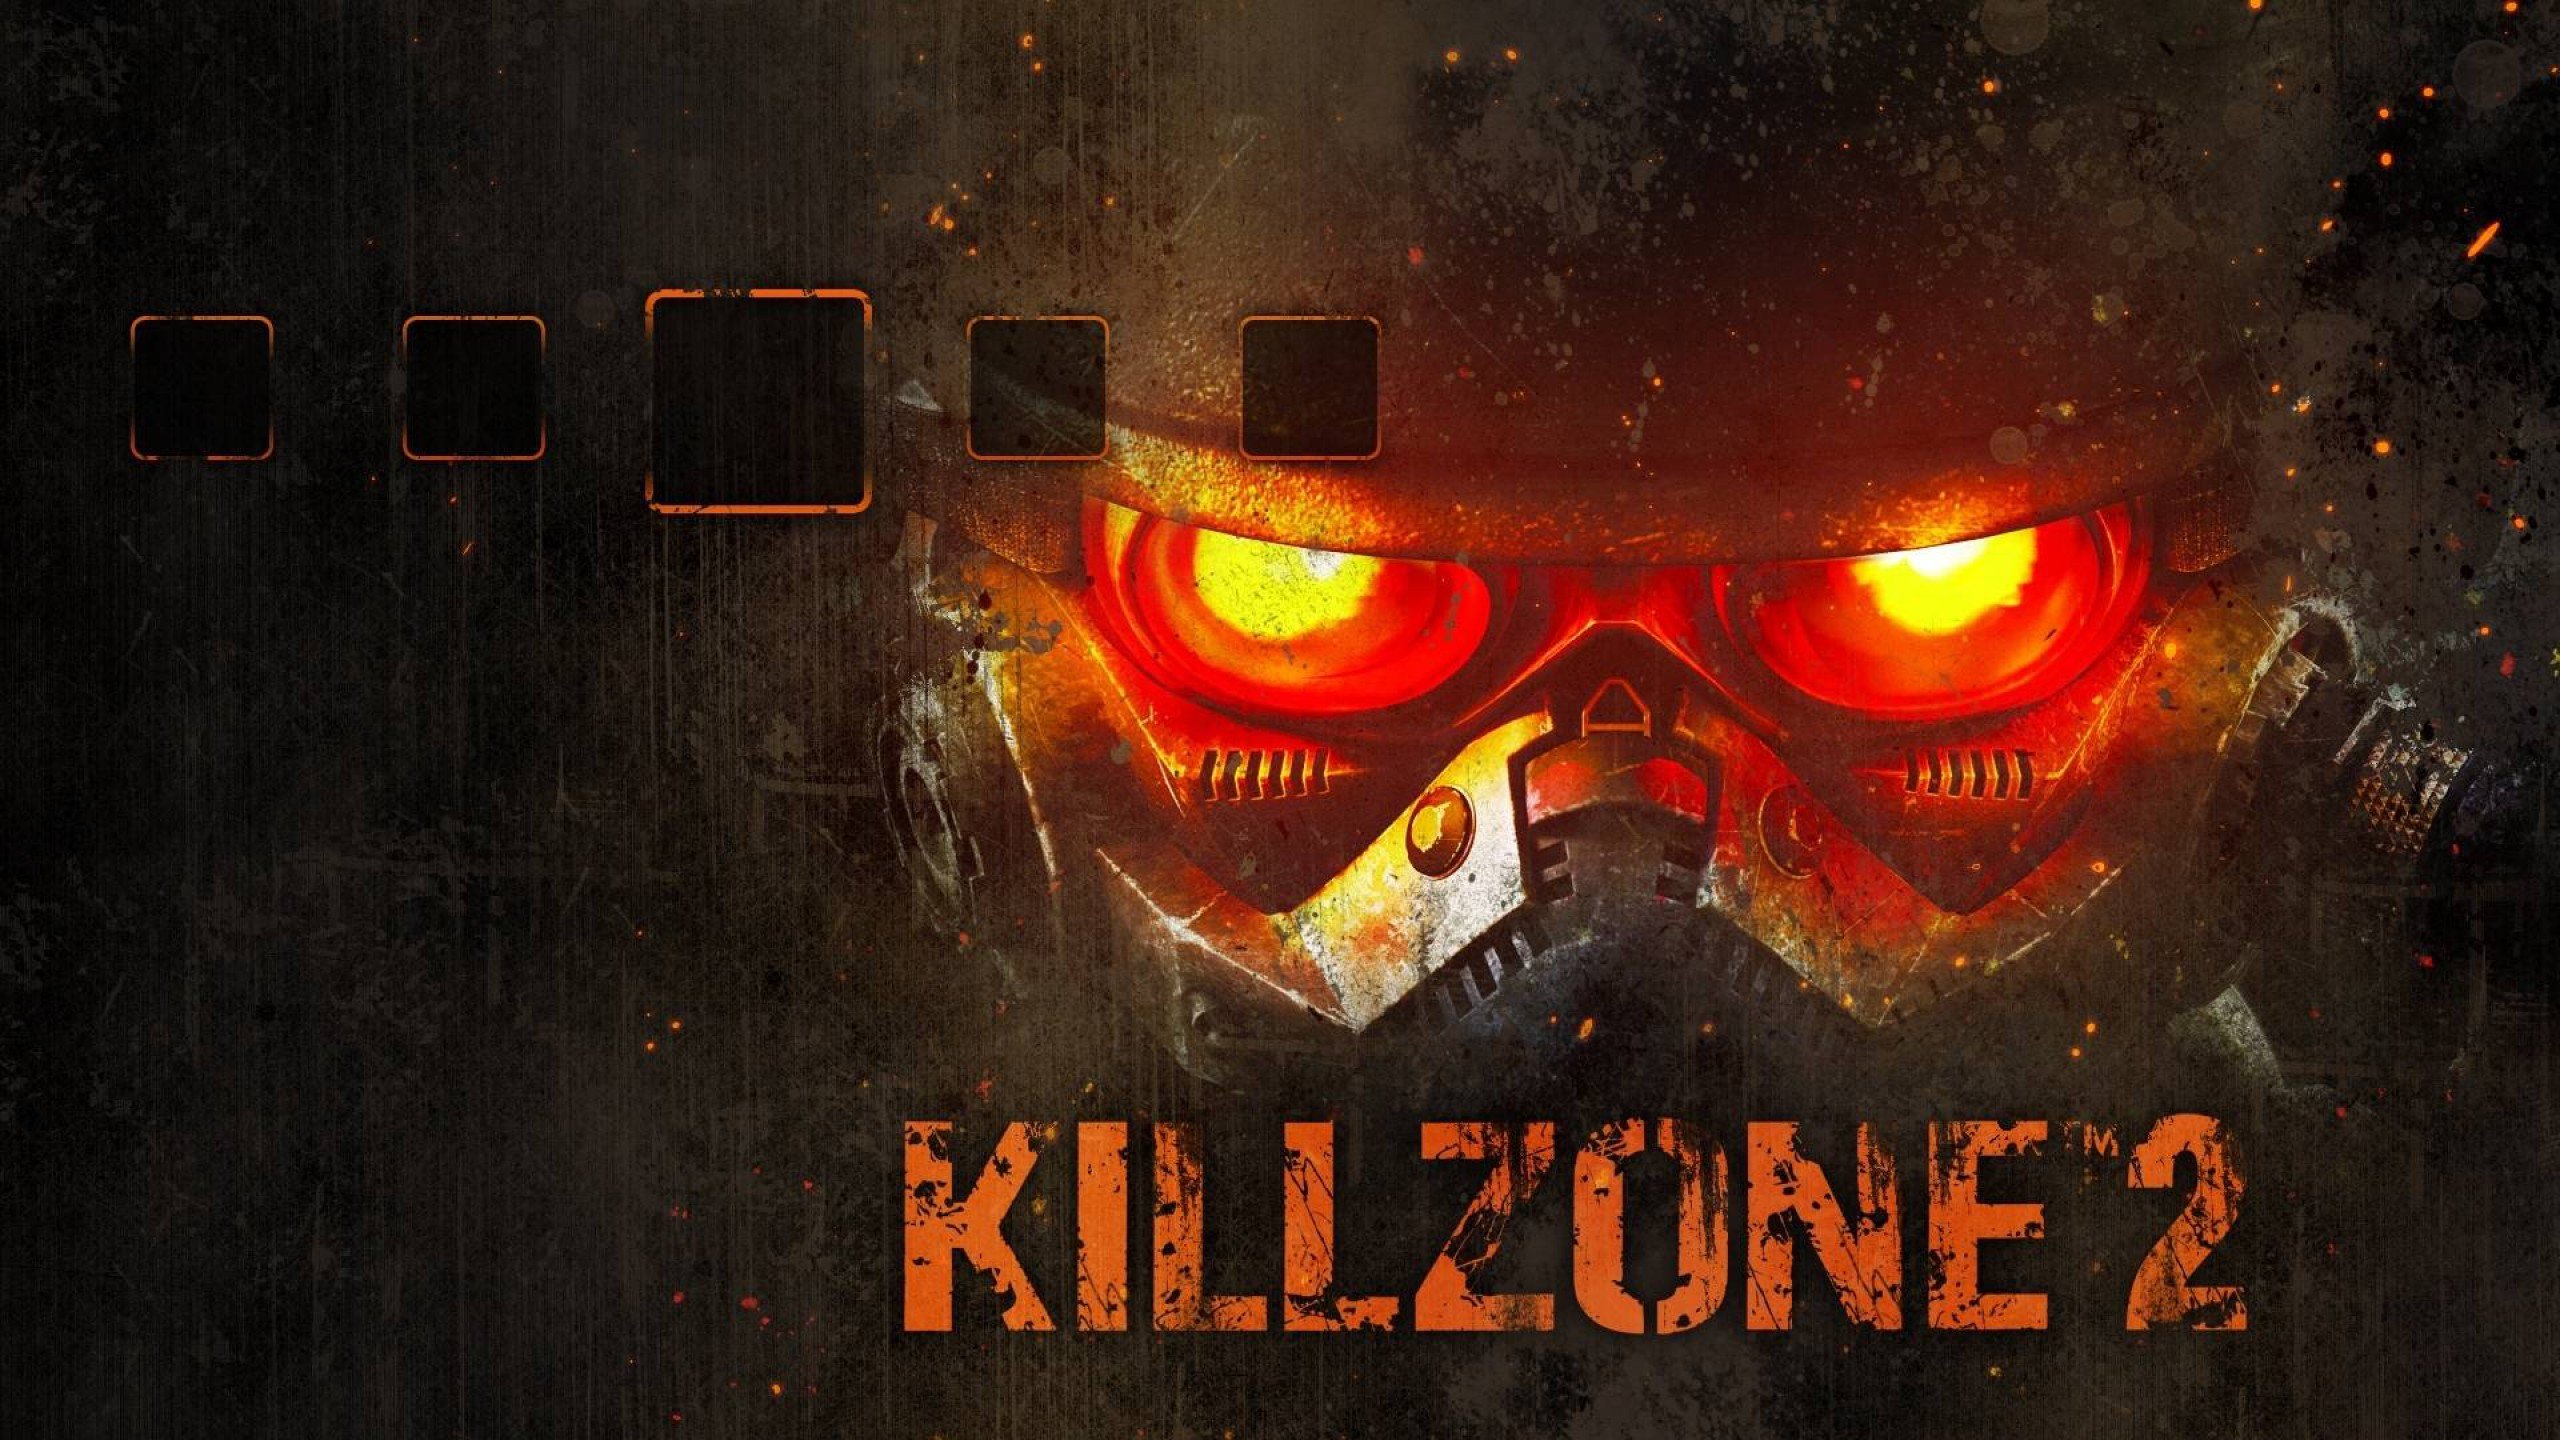 Killzone 2 Wallpapers